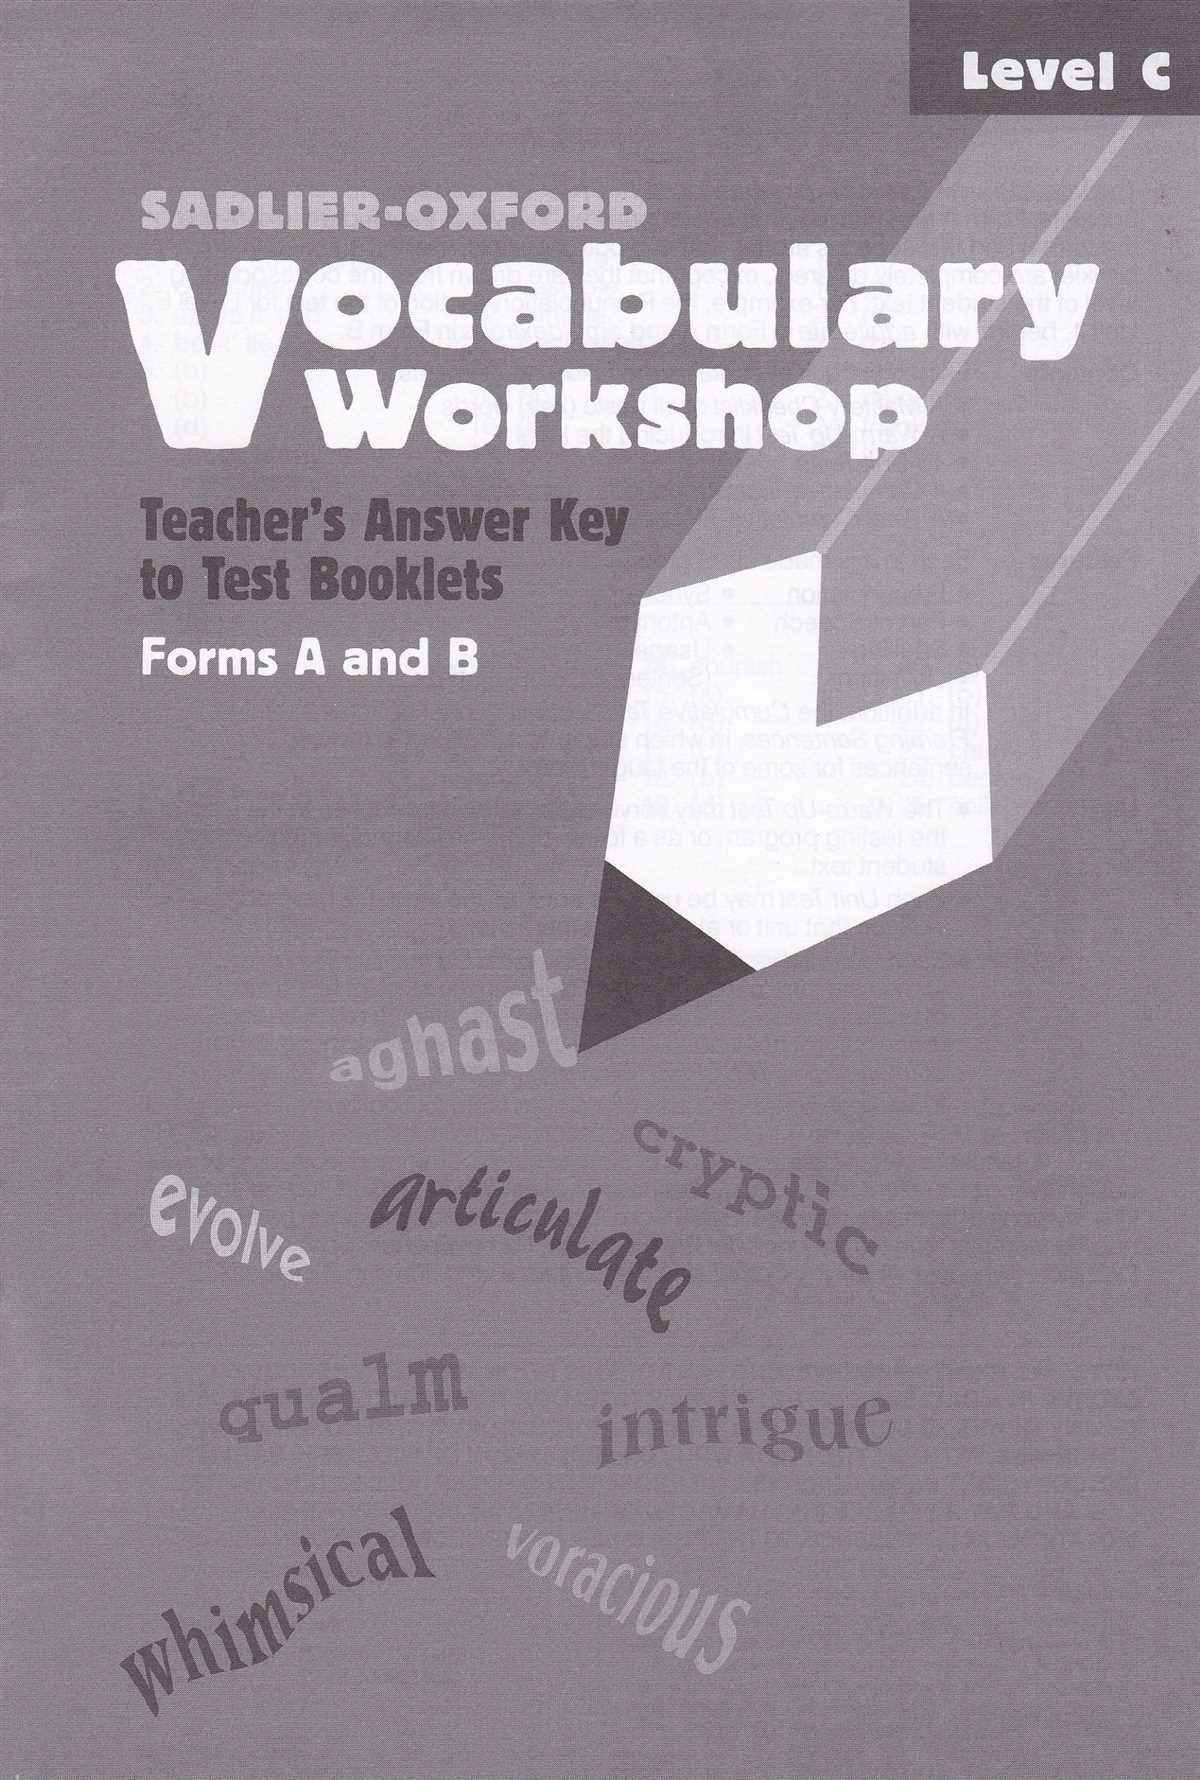 Tips for Improving Vocabulary Skills